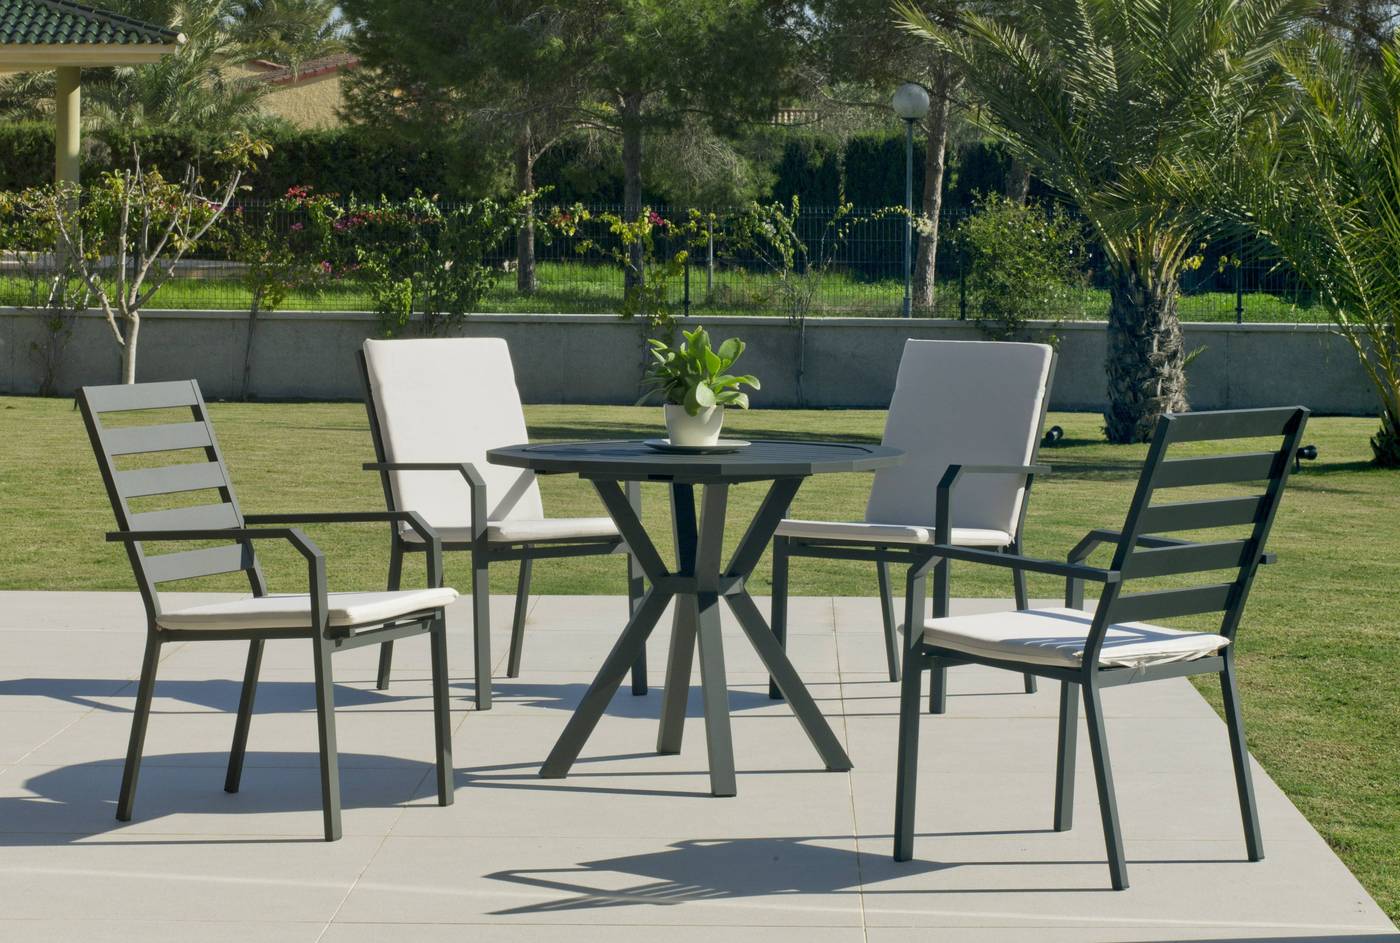 Set Aluminio Baracoa-Palma 110-4 - Moderno conjunto de aluminio luxe: Mesa de comedor poligonal de 110 cm. + 4 sillones de aluminio. Disponible en color blanco, plata y antracita.